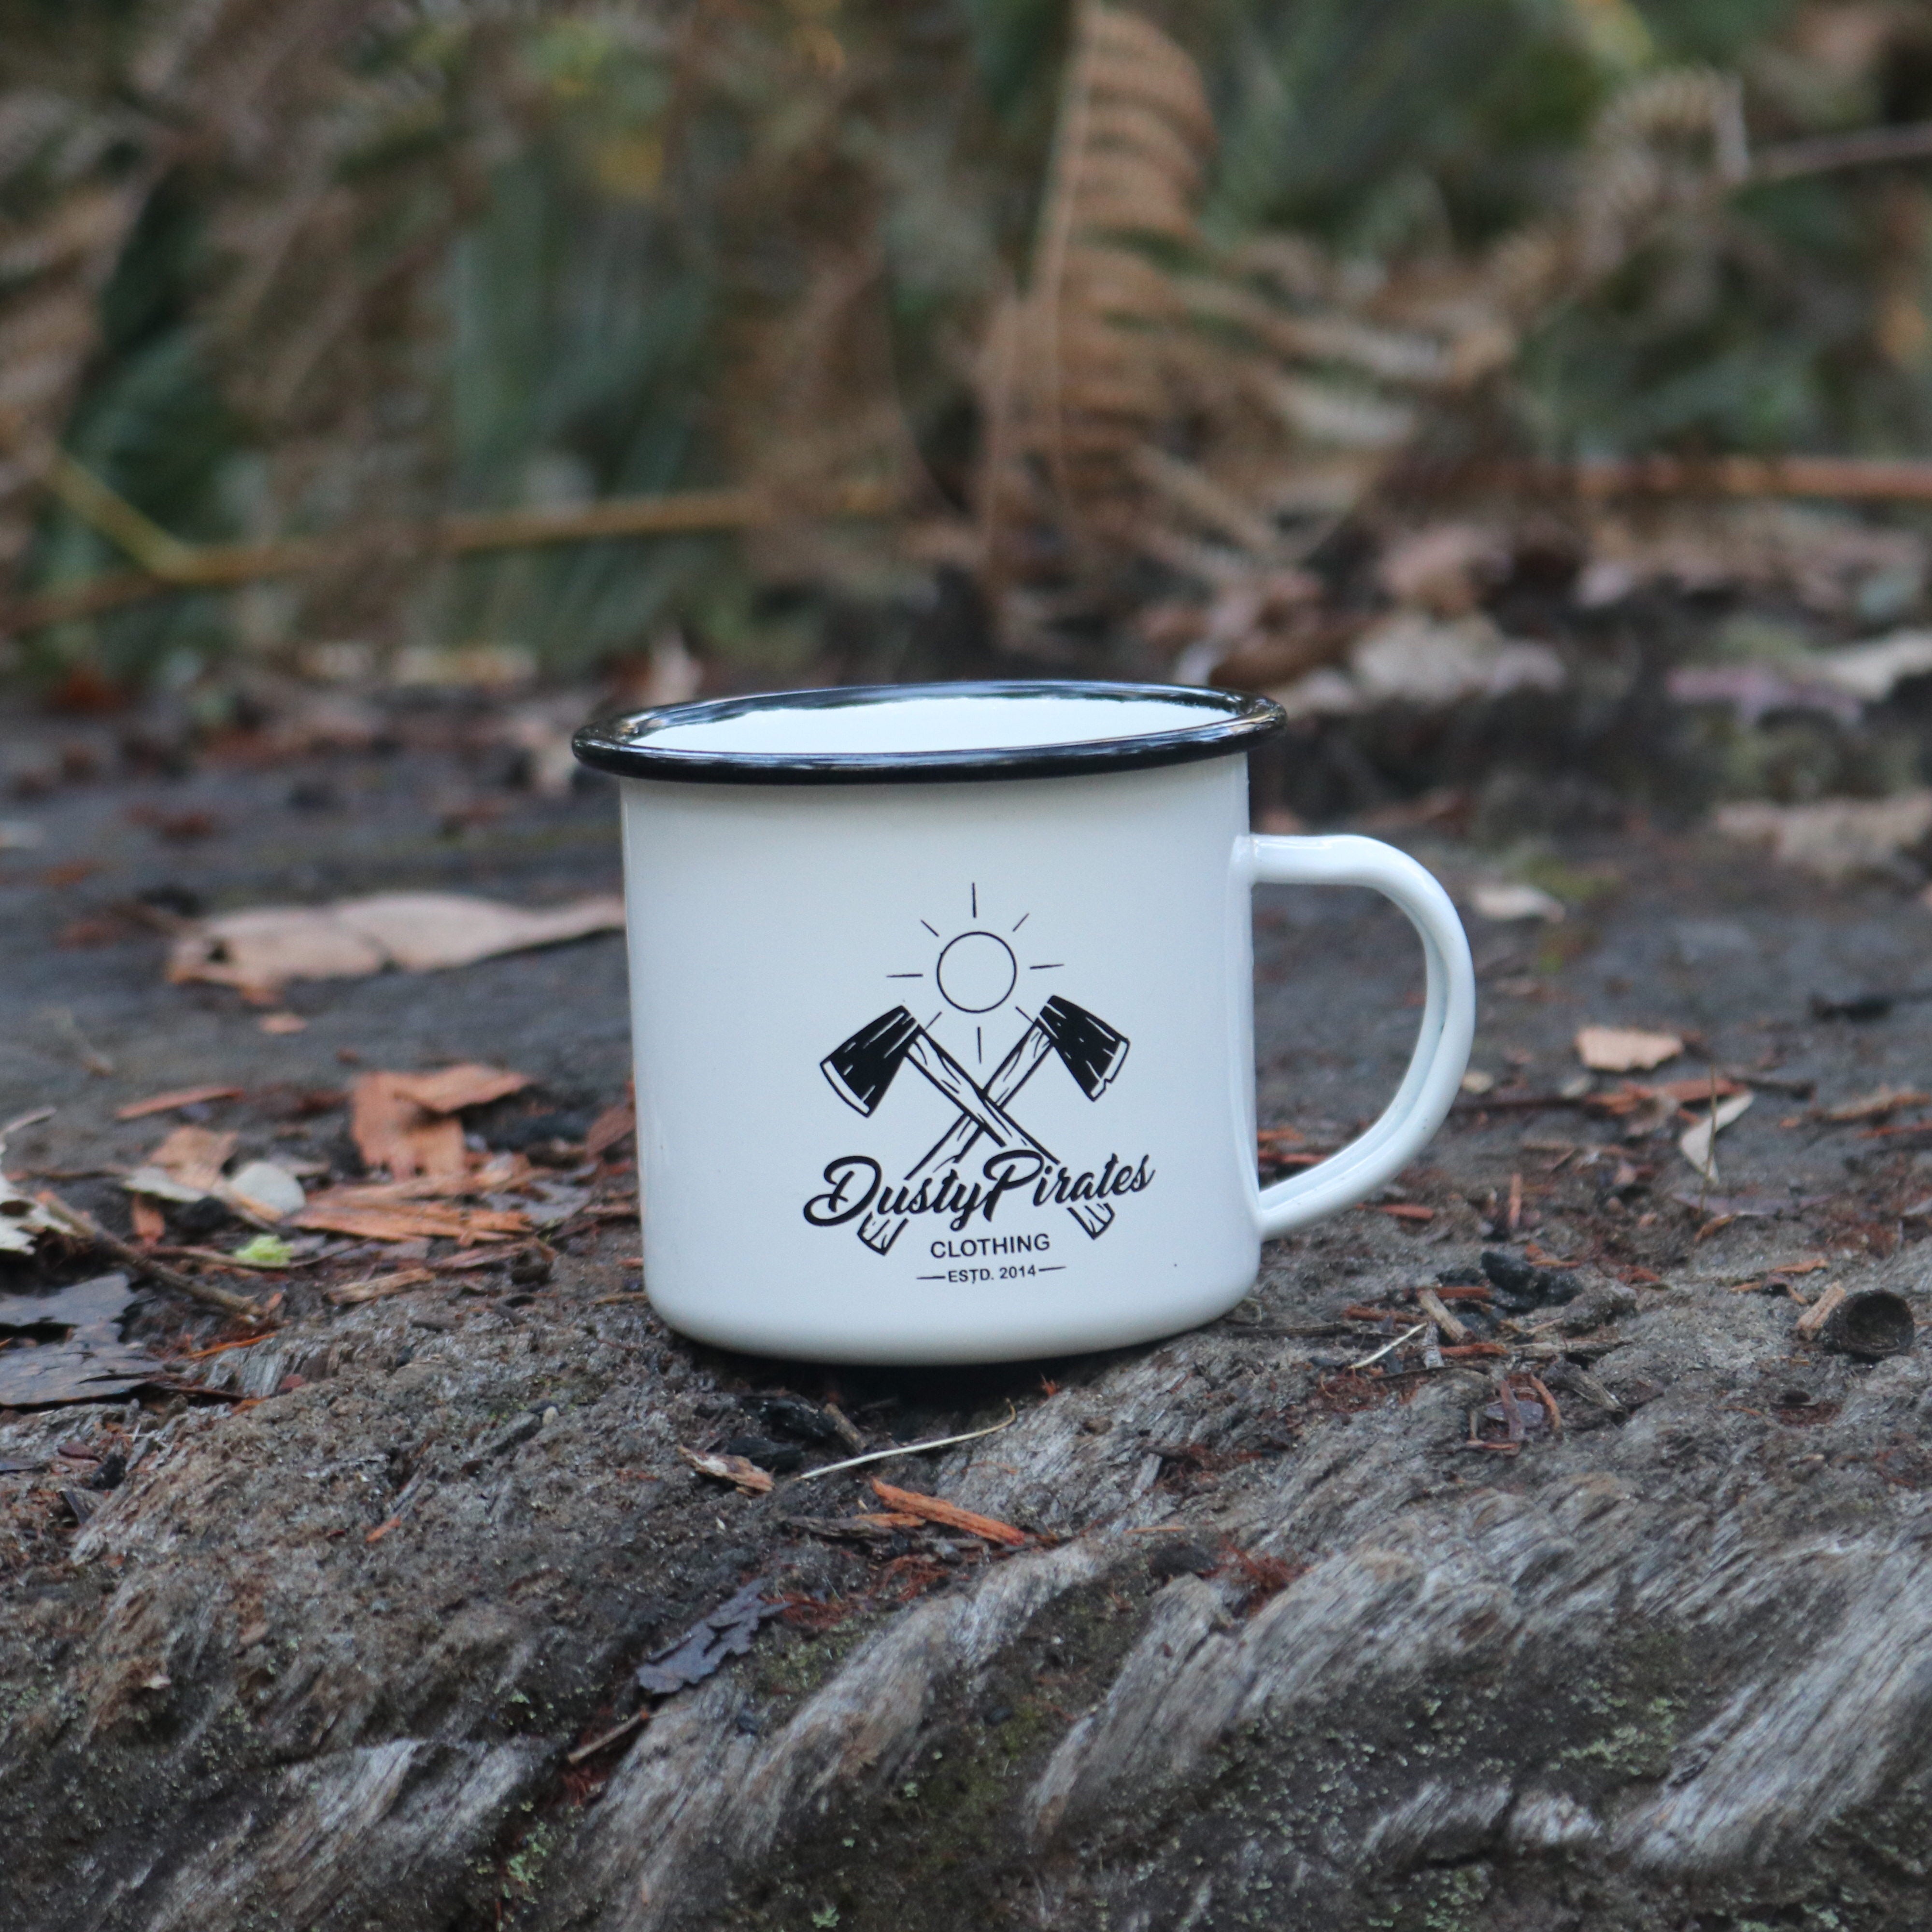 Camper mug - Dusty Pirates